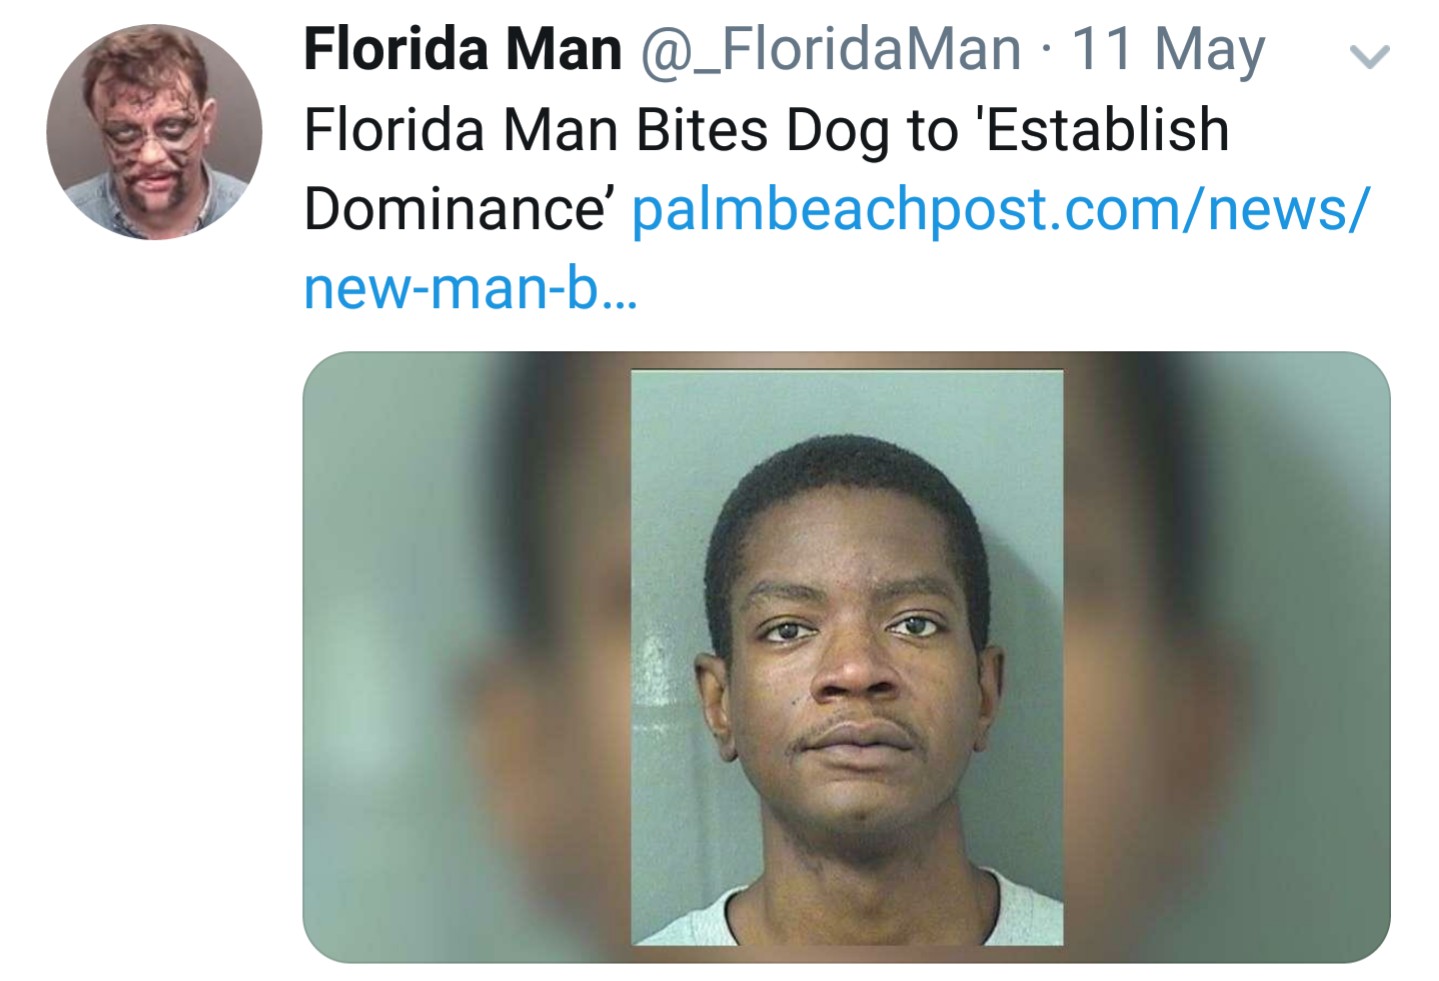 18 Florida men who've lost control